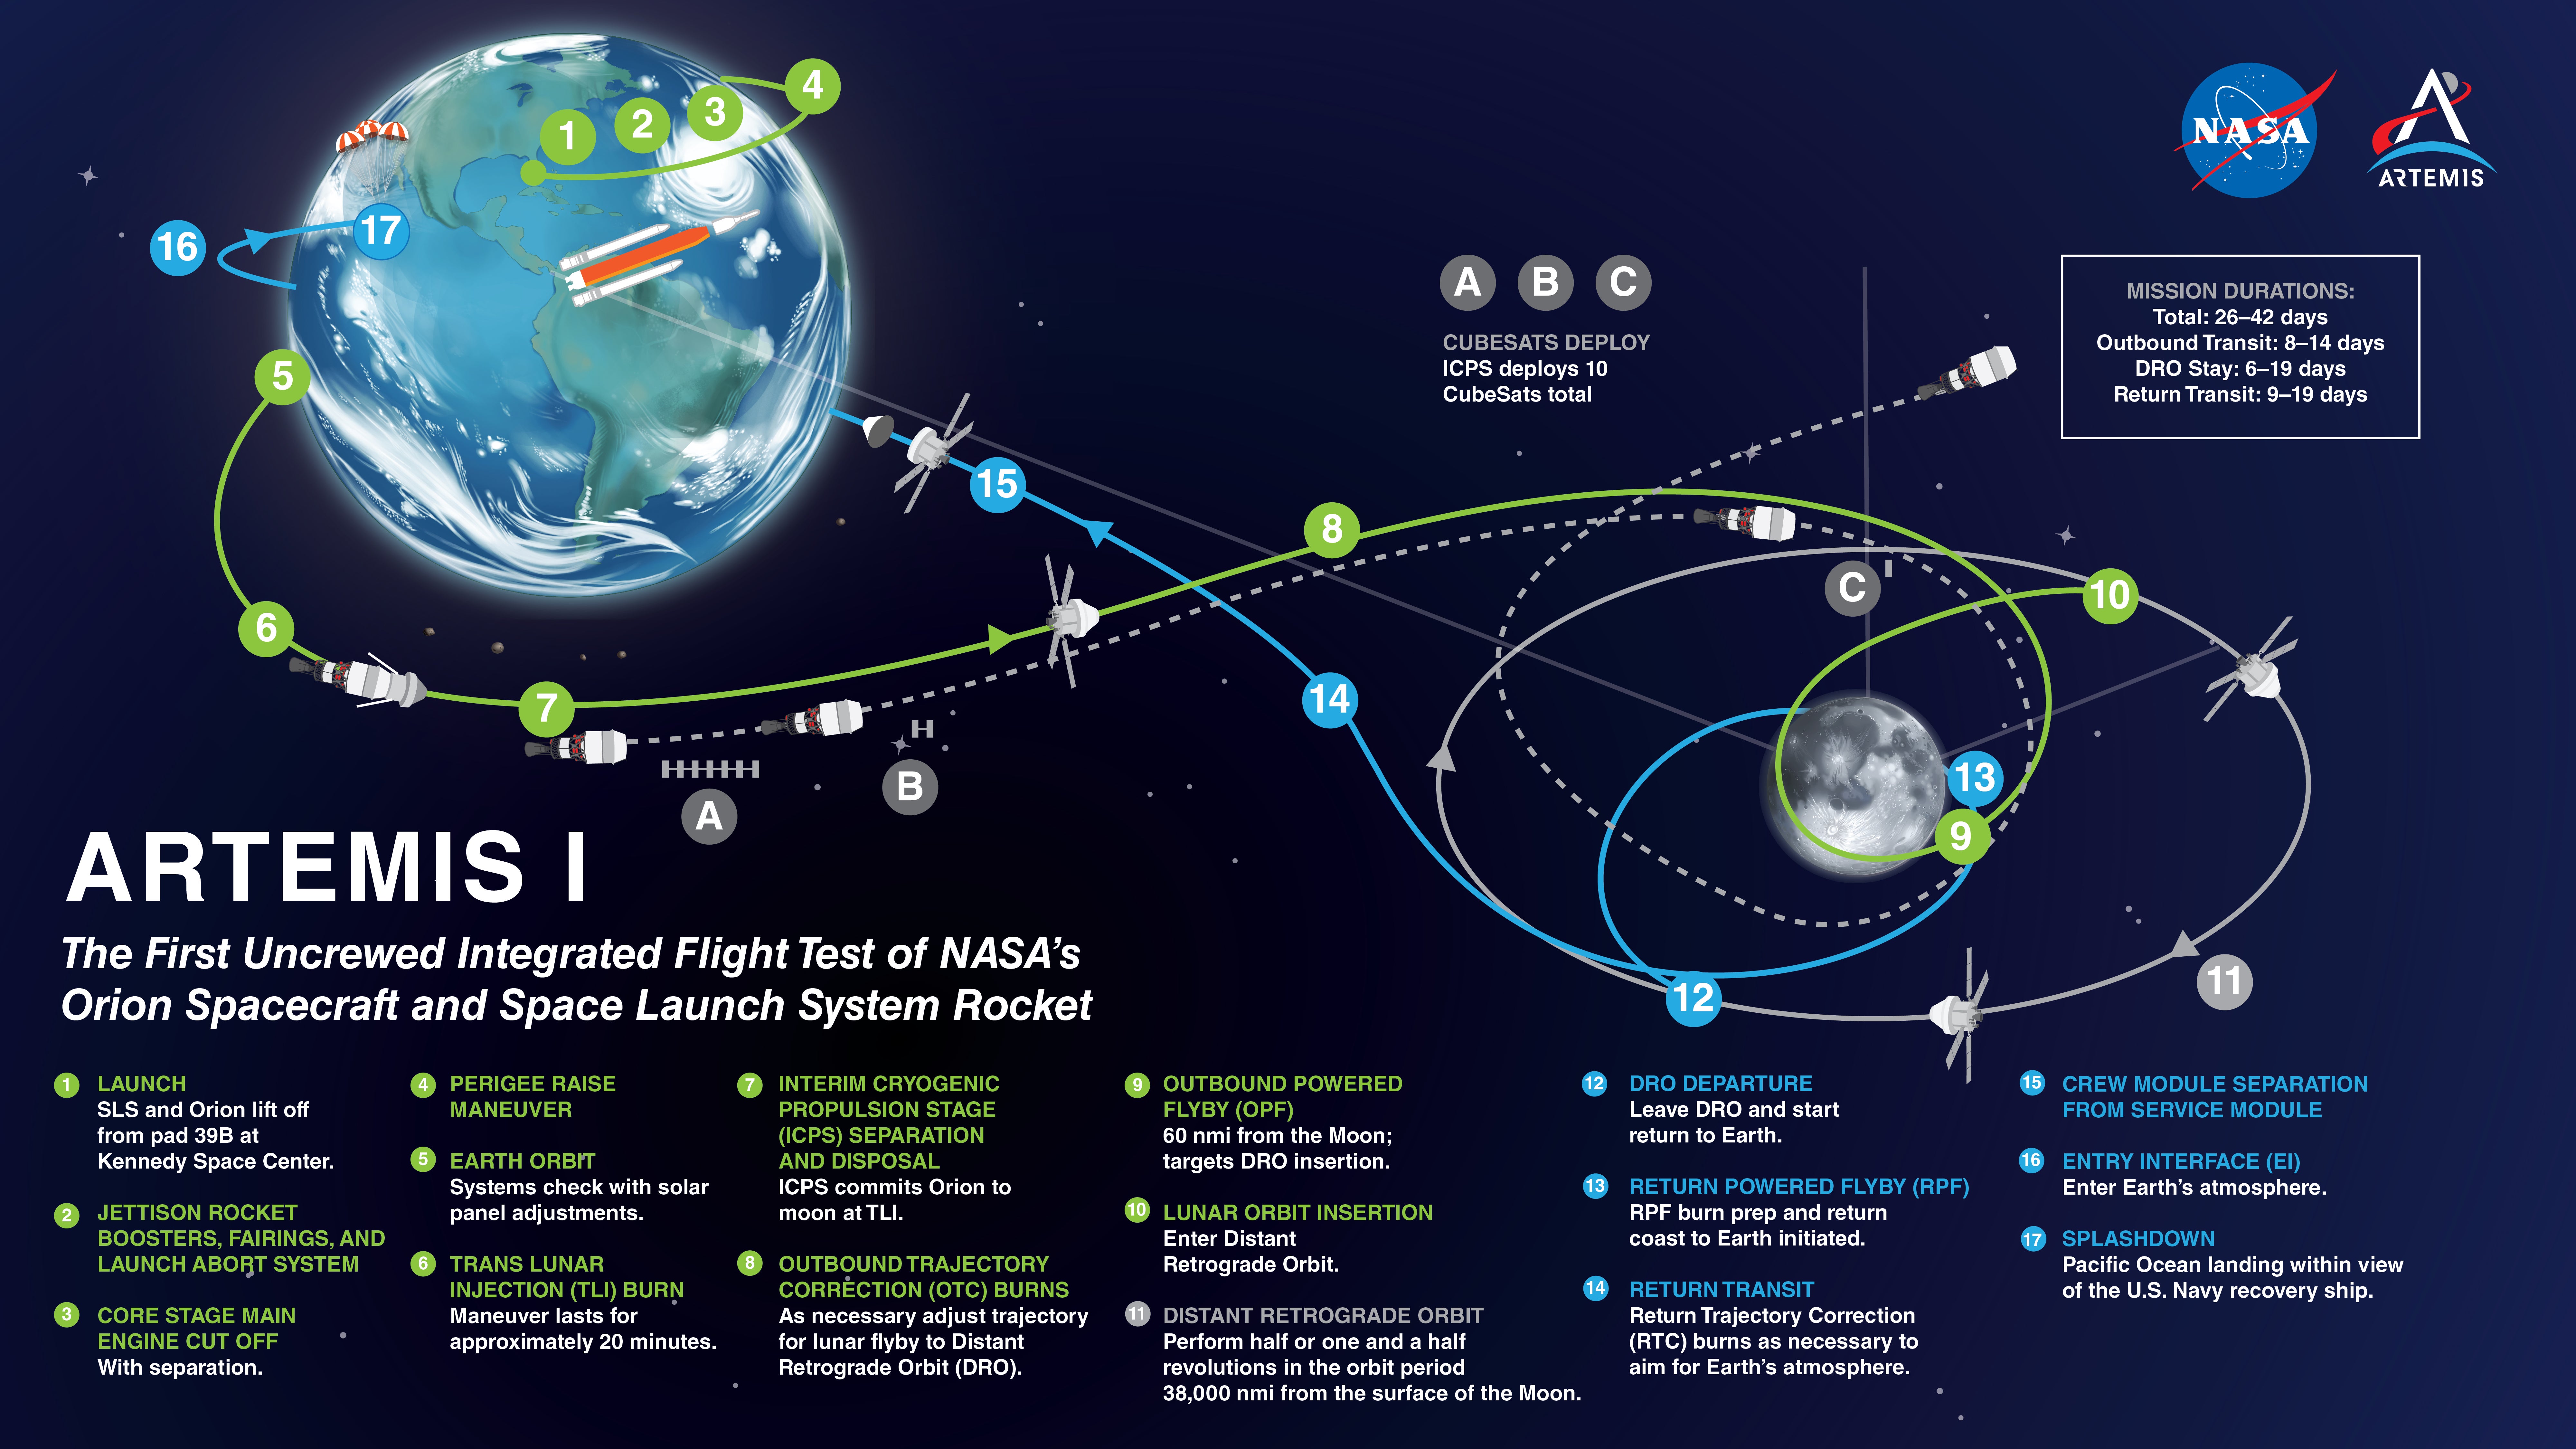 Overview of Artemis 1. (Image: NASA)